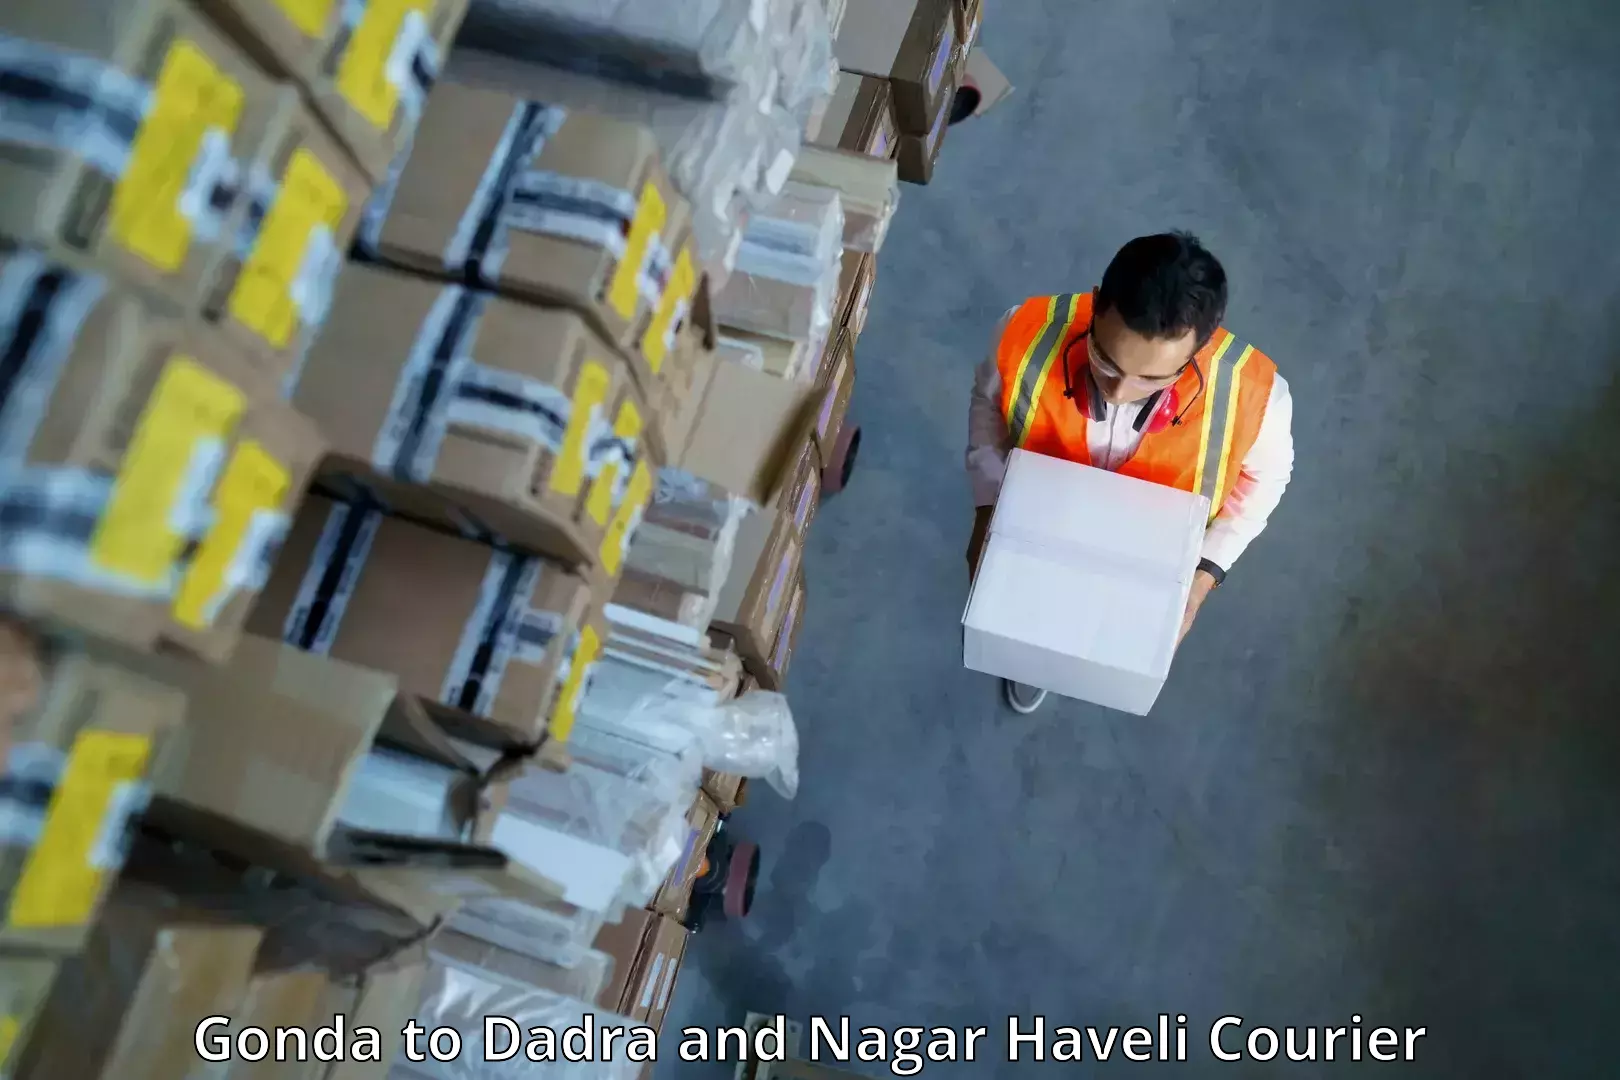 Courier service comparison Gonda to Dadra and Nagar Haveli